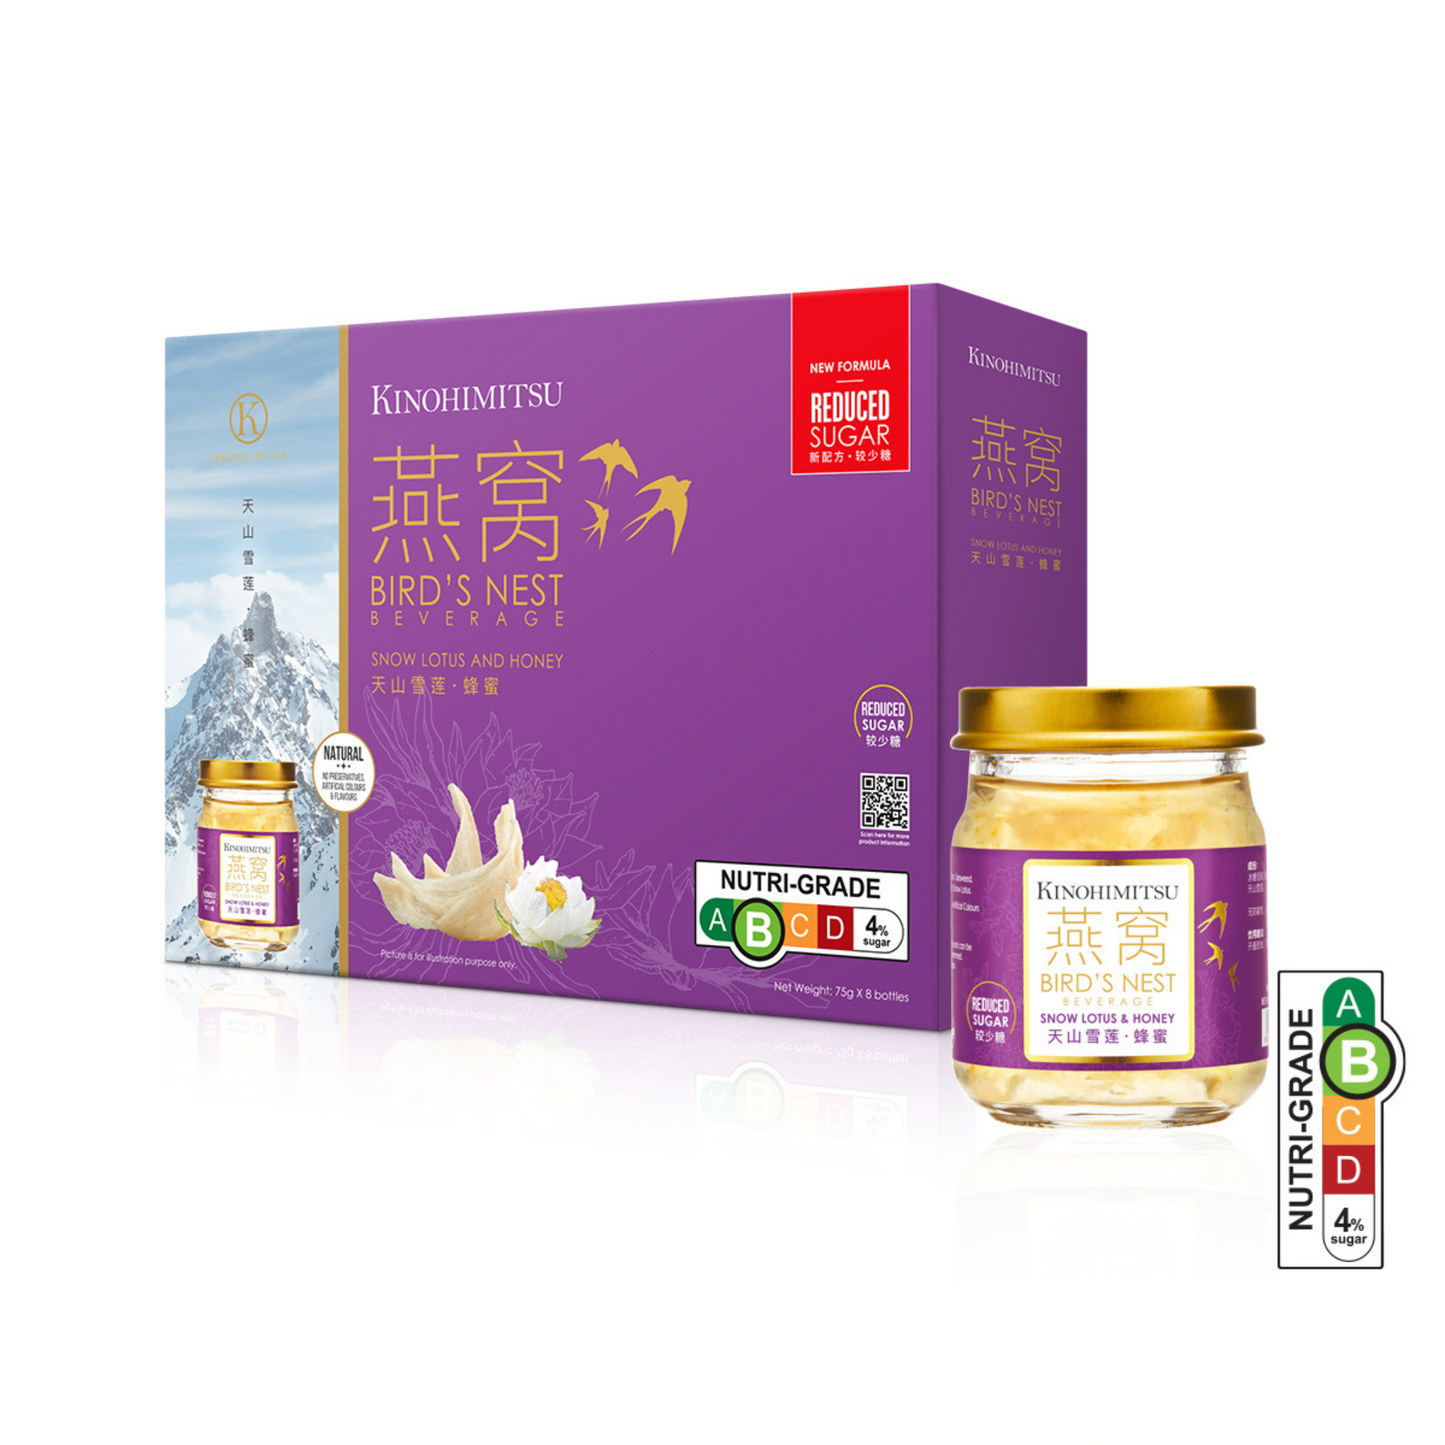 Snow Lotus and Honey Bird's Nest (Reduced Sugar)